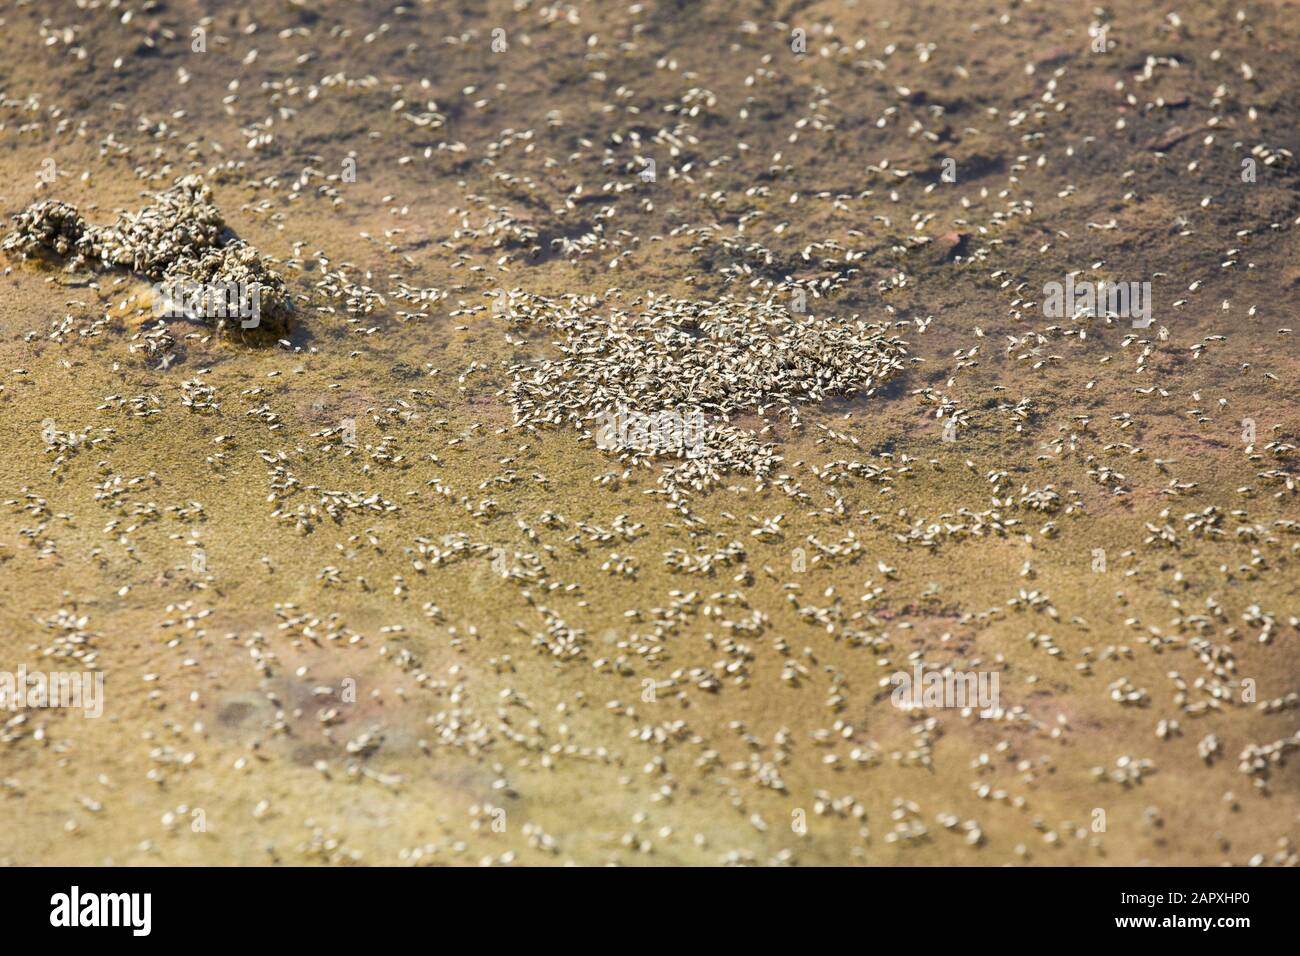 Brine flies clustered on algae at Salar de Atacama, Chile Stock Photo